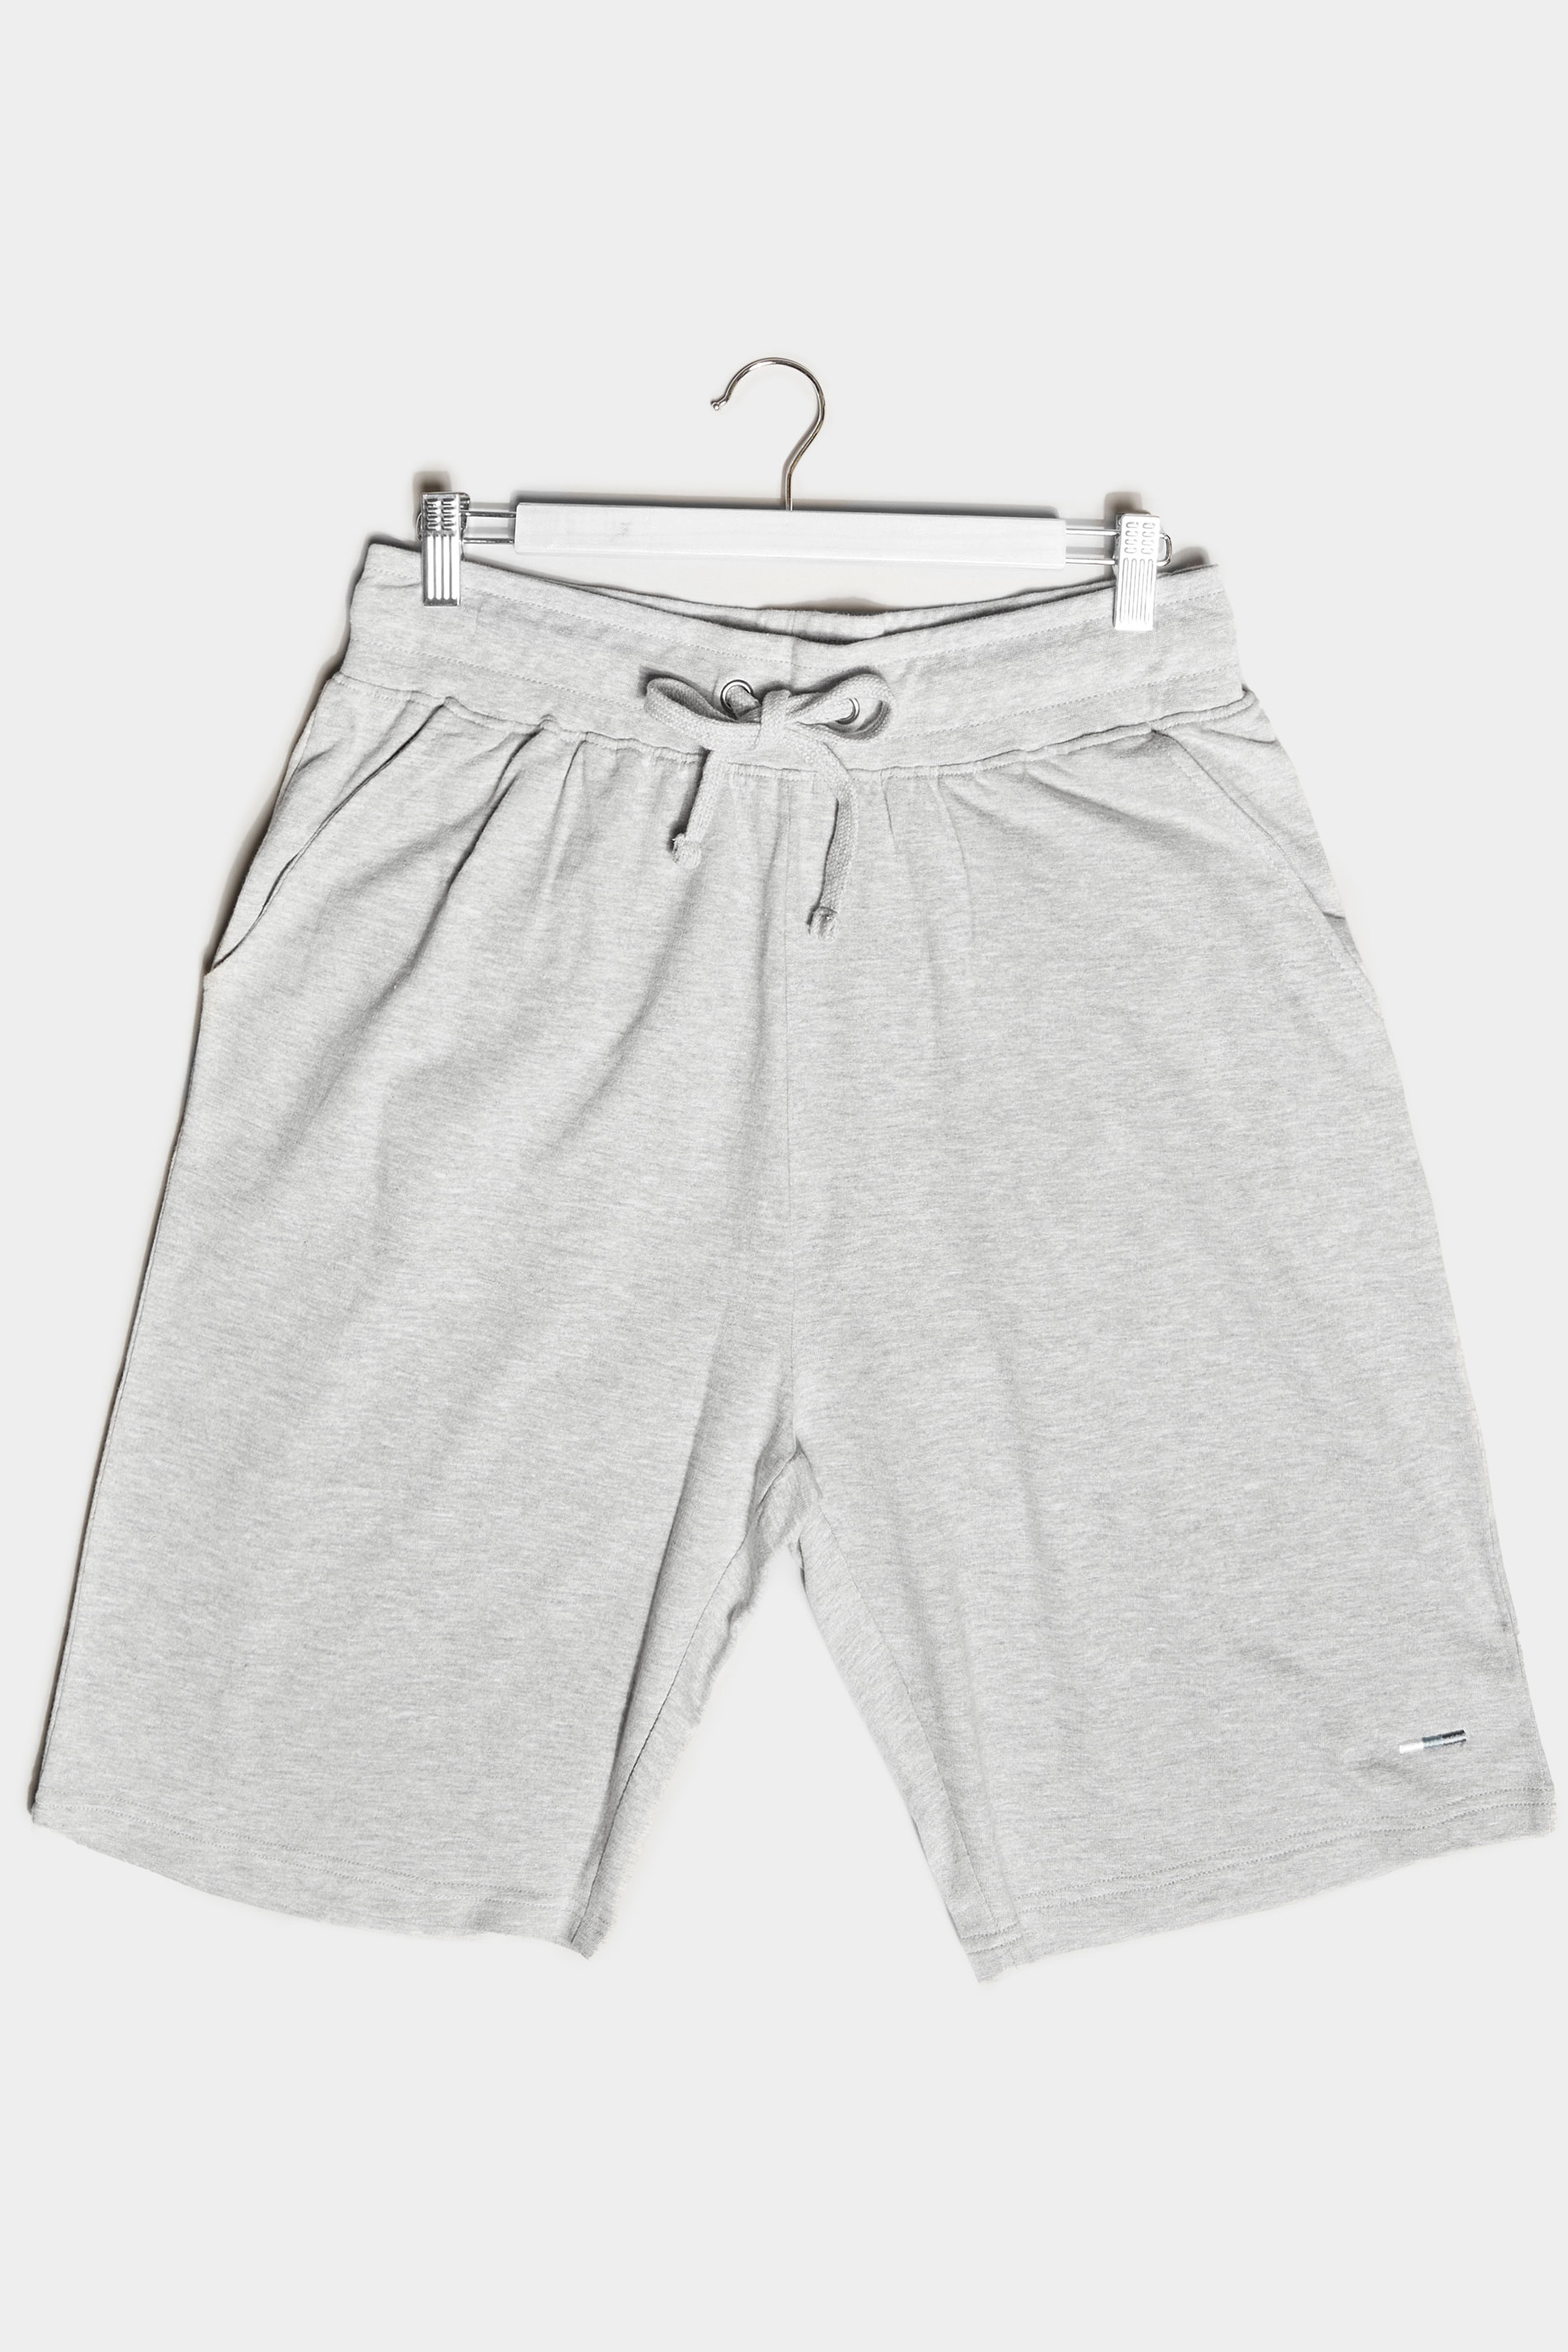 BadRhino Grey Marl Essential Jogger Shorts | BadRhino